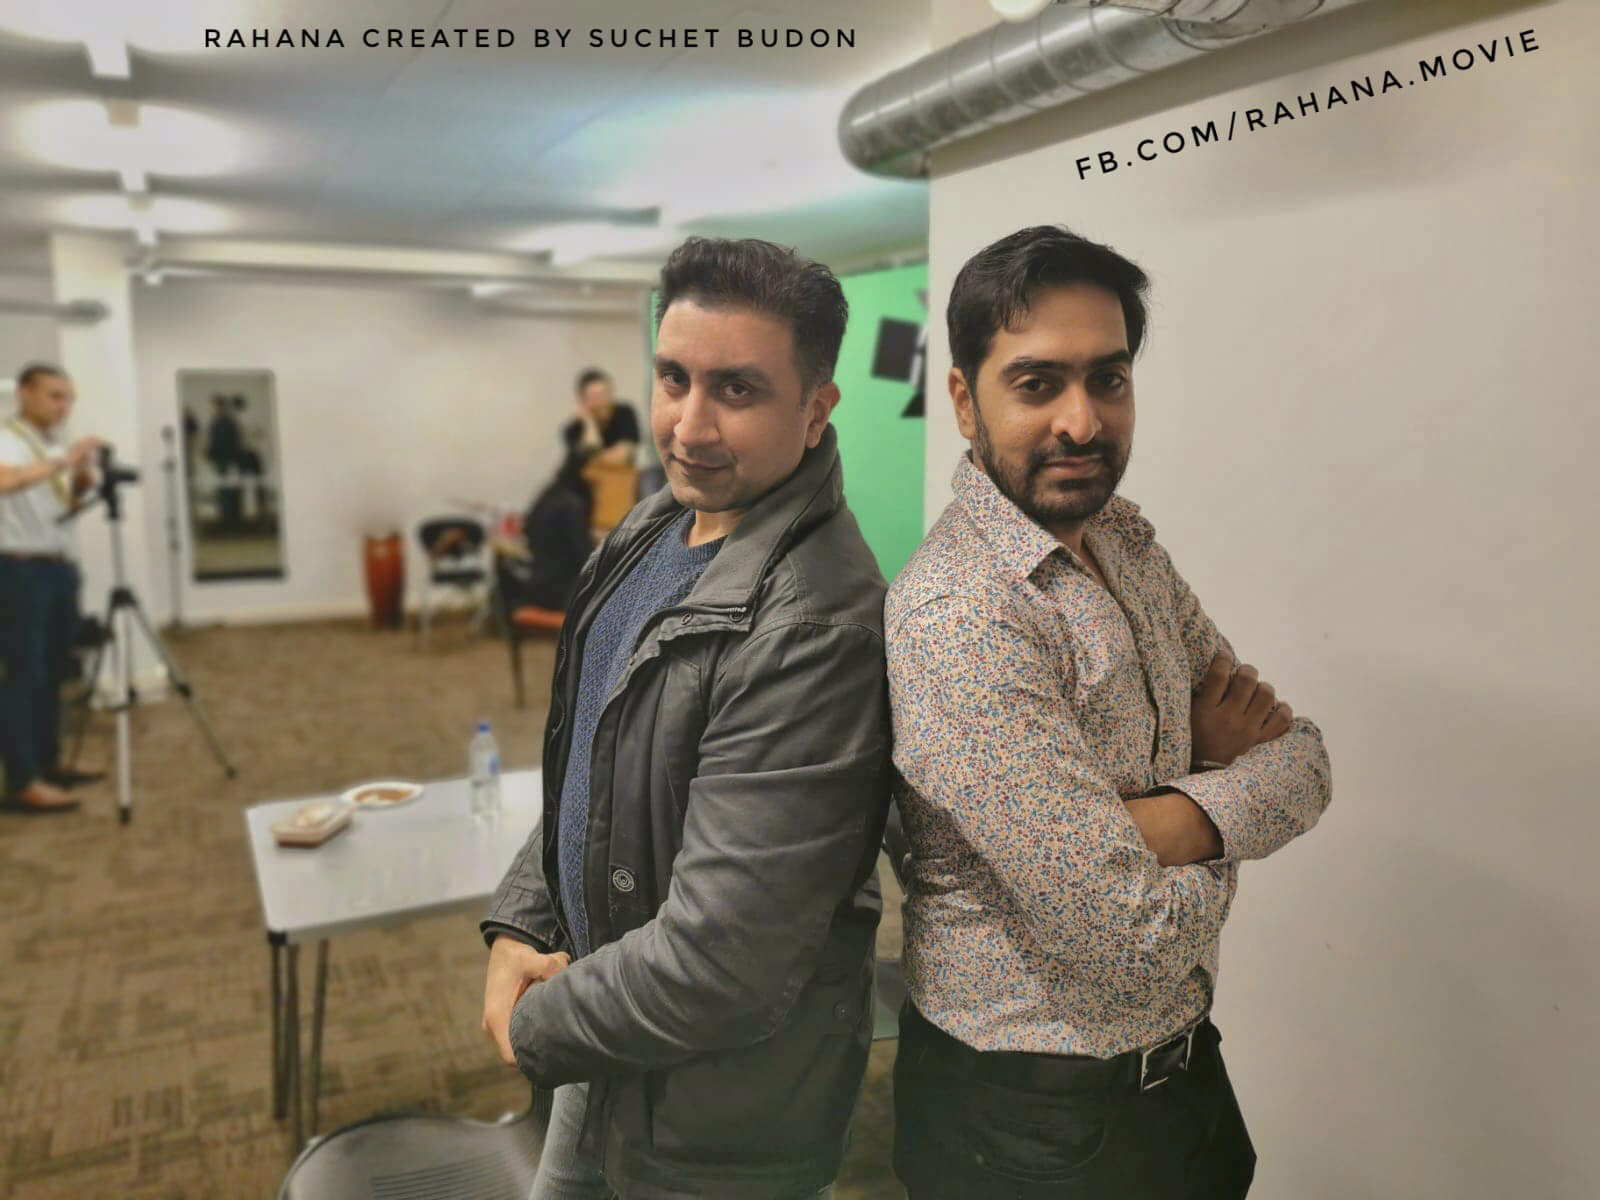 Actors Fraz Awan and Shaid Parvaz at a blue-scree studio shoot for Rahana